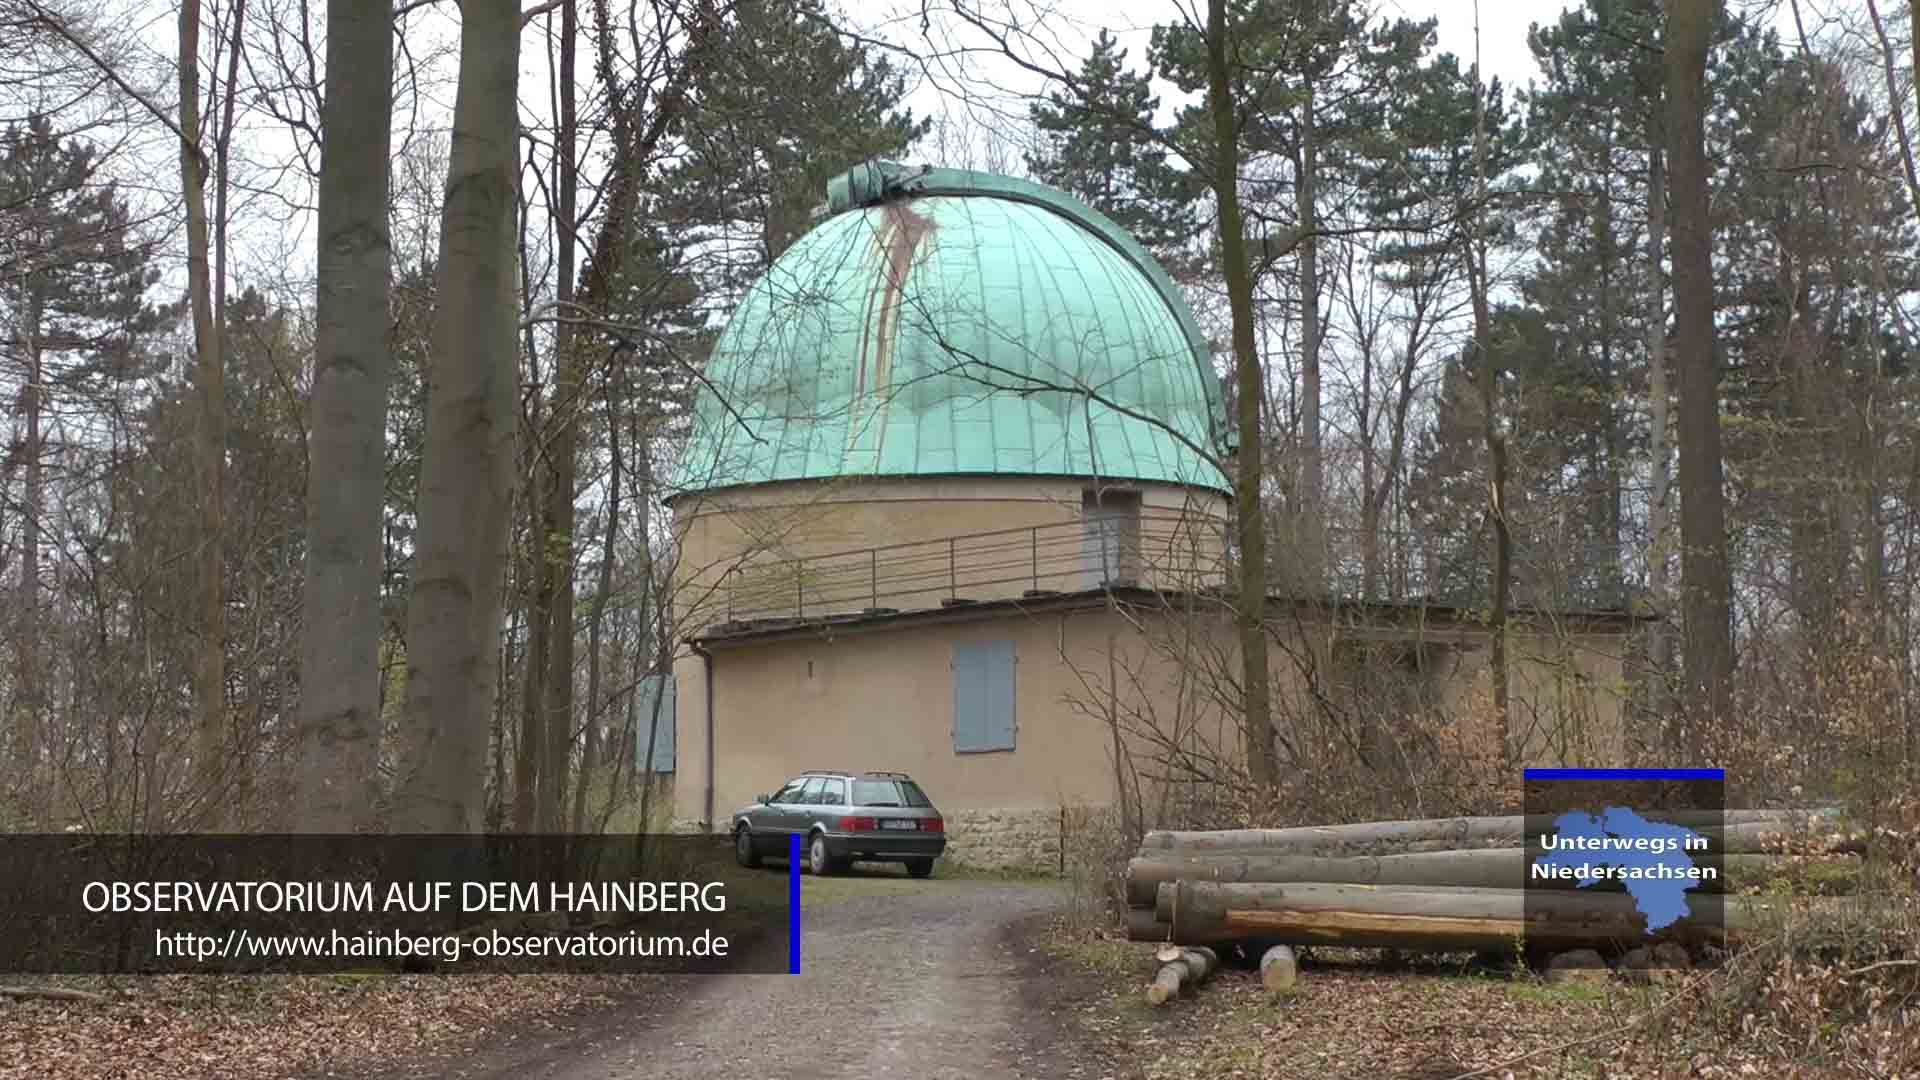 Hainberg Observatorium